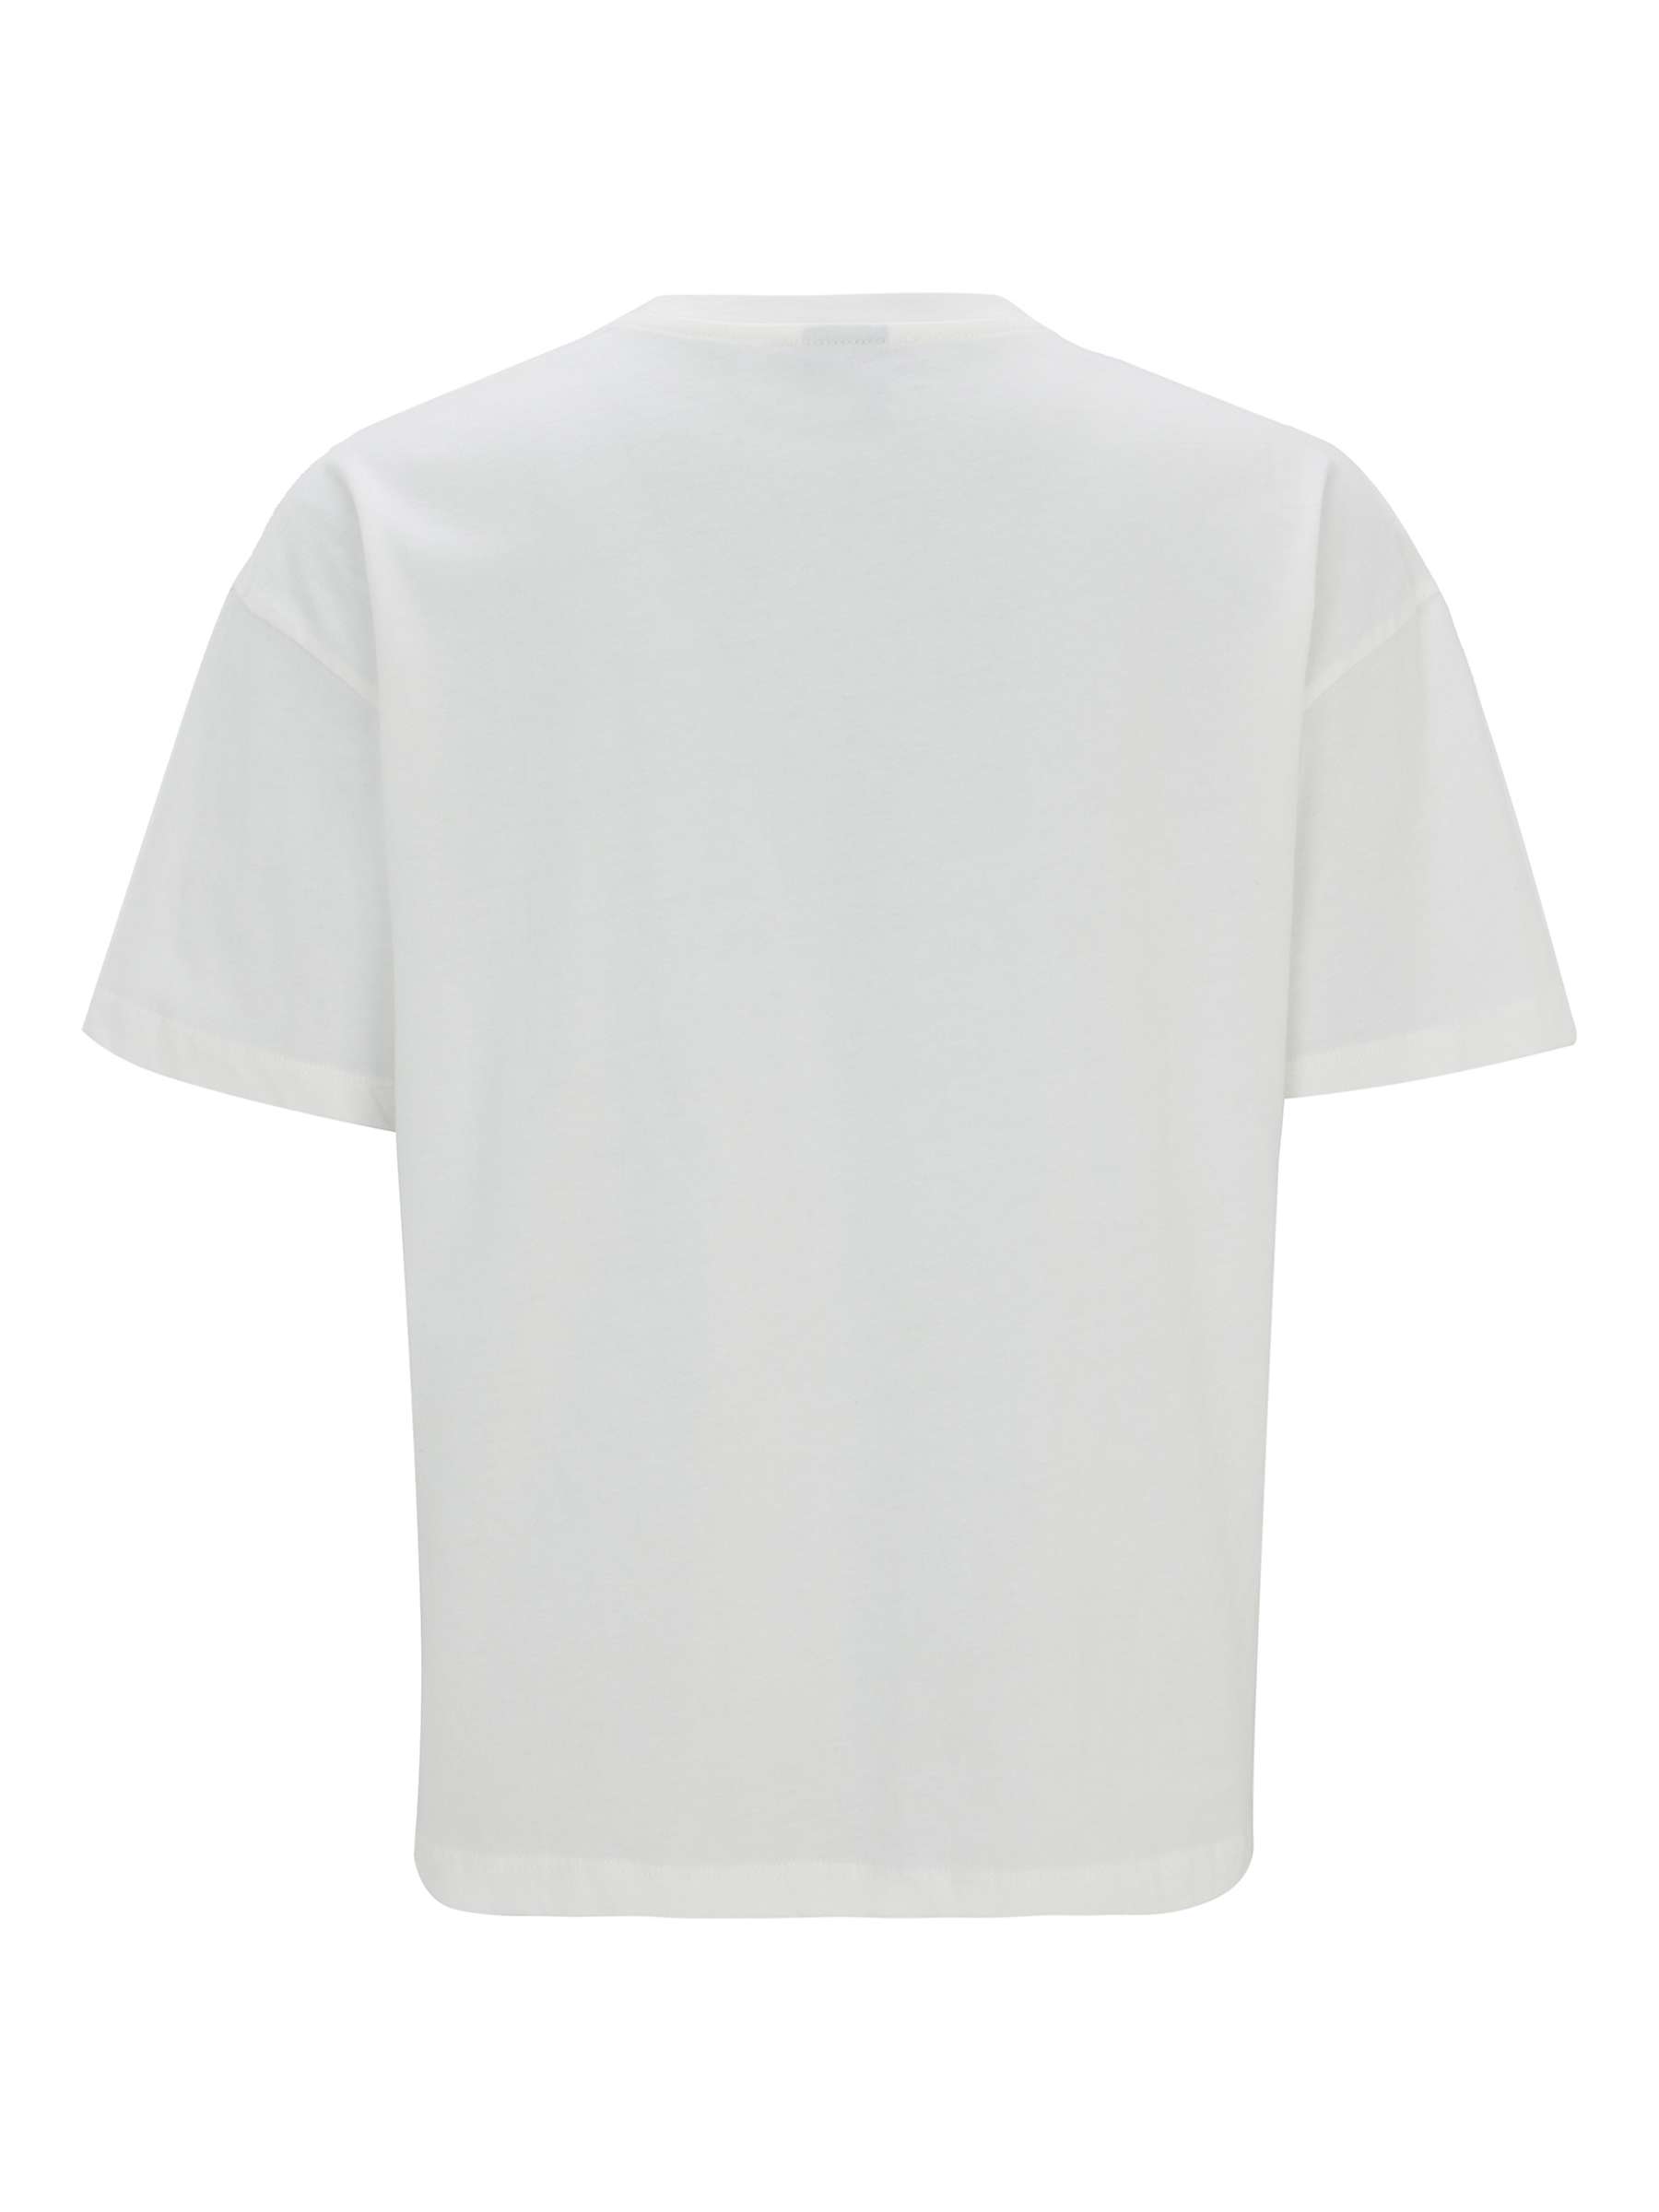 Buy Mint Velvet Cotton Fleetwood Mac T-Shirt, White Online at johnlewis.com